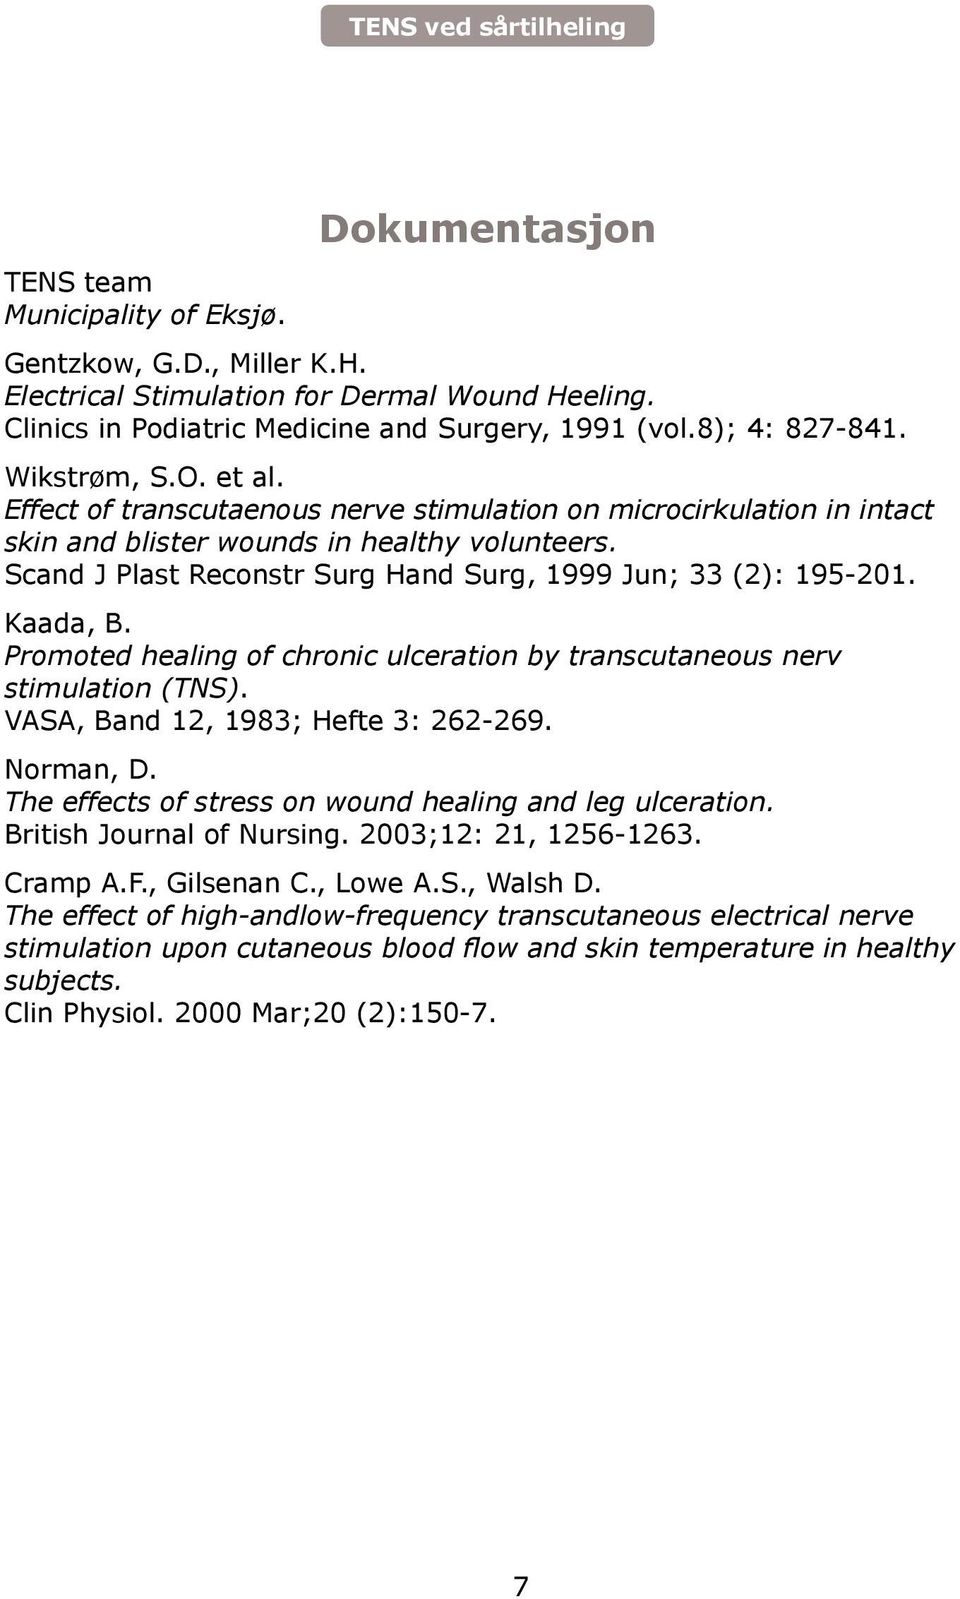 Scand J Plast Reconstr Surg Hand Surg, 1999 Jun; 33 (2): 195-201. Kaada, B. Promoted healing of chronic ulceration by transcutaneous nerv stimulation (TNS). VASA, Band 12, 1983; Hefte 3: 262-269.